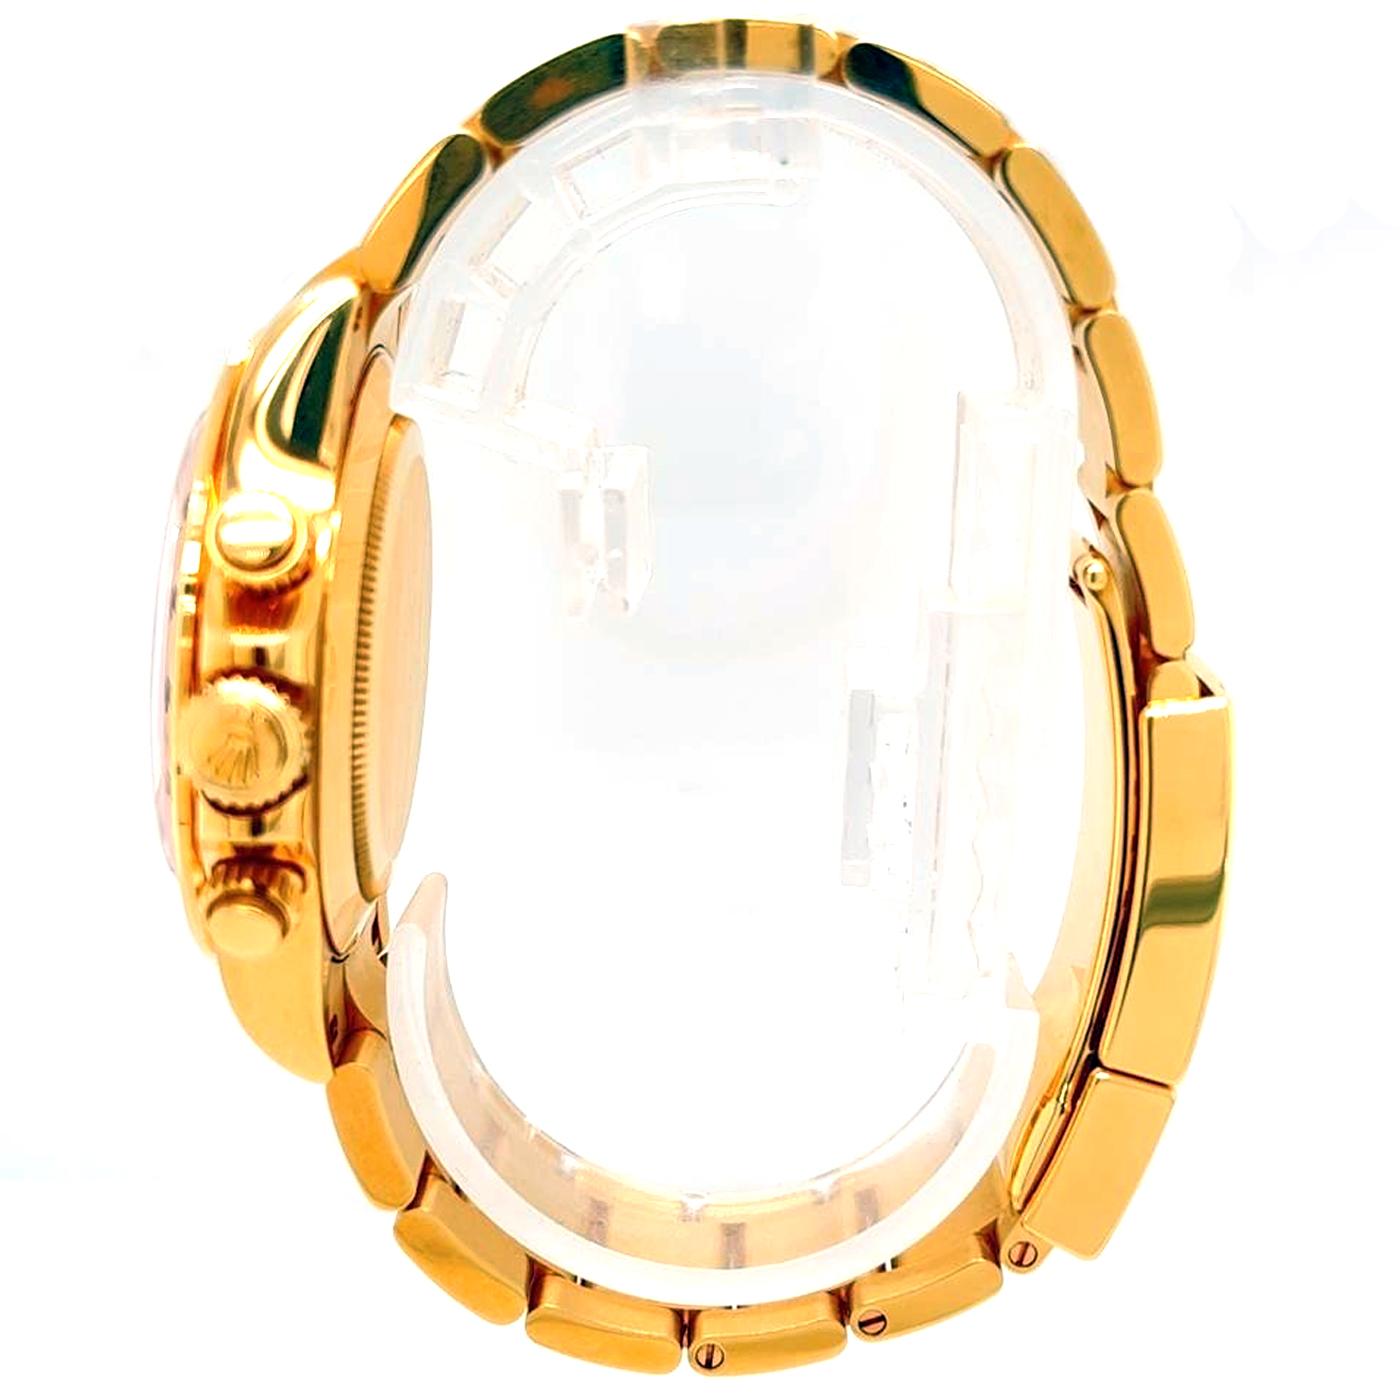 Modernist Rolex Daytona Chronograph 18k Yellow Gold Diamond Black Dial Watch 116528 For Sale